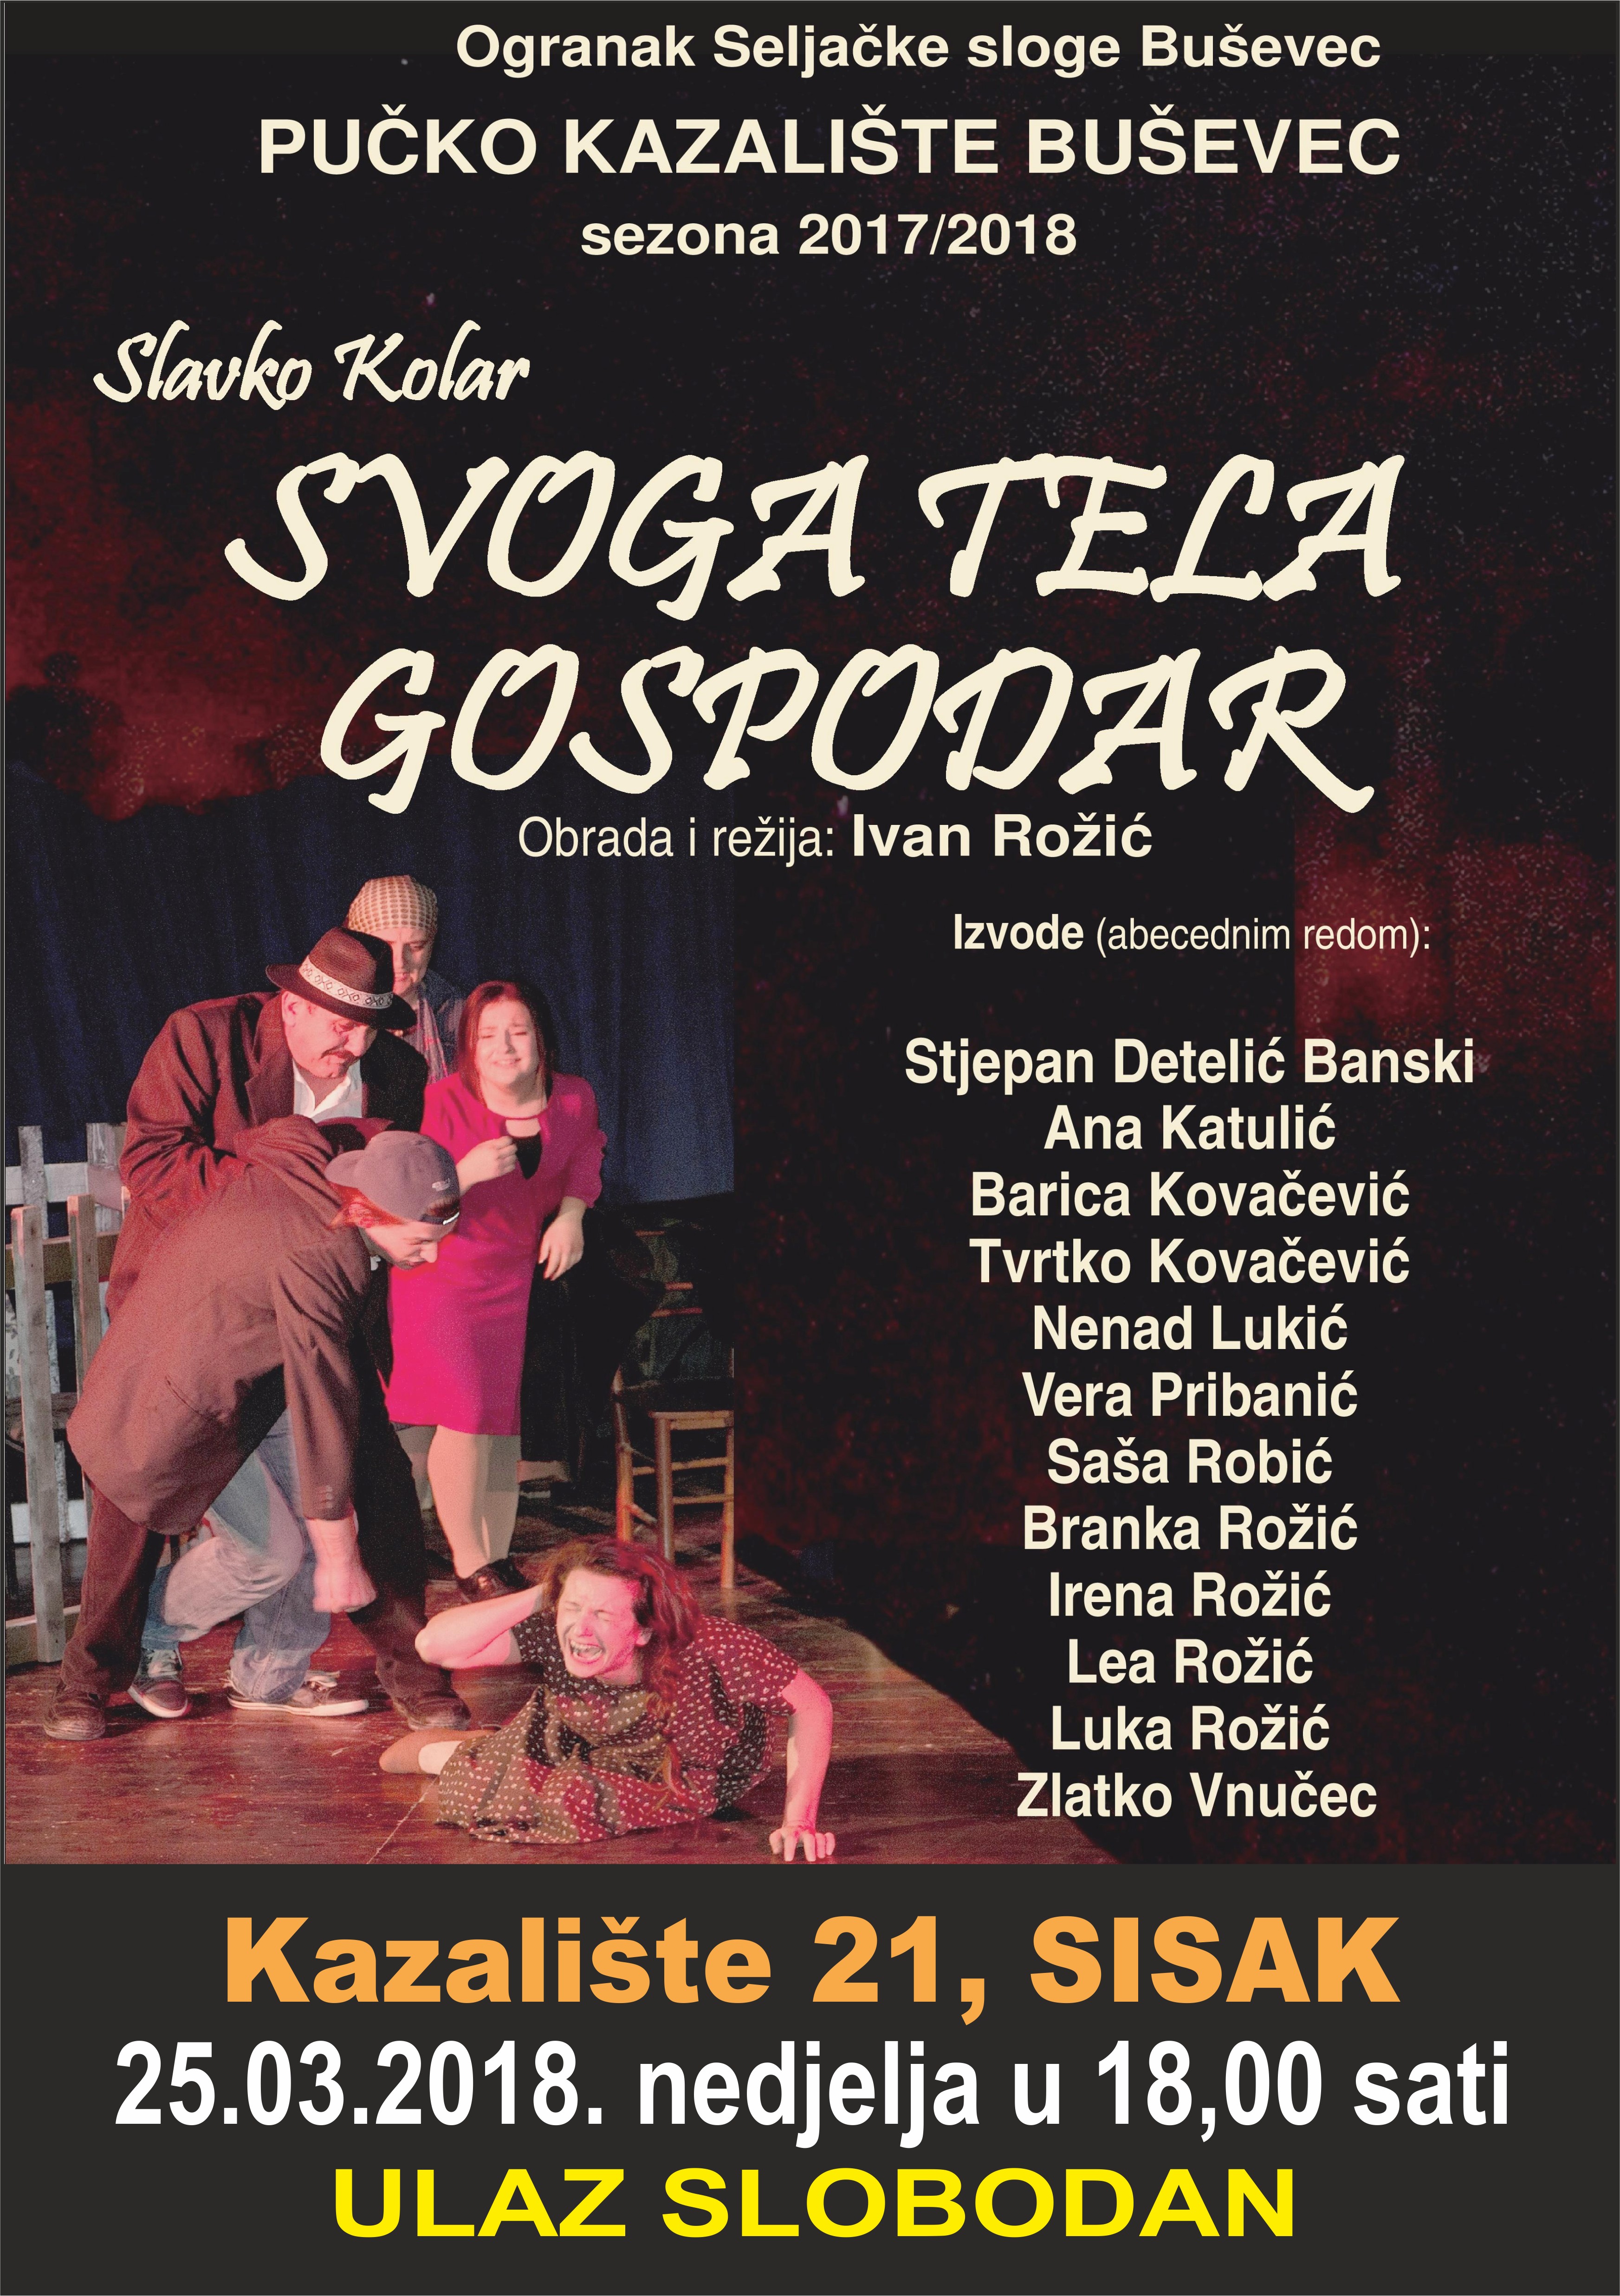 You are currently viewing Predstava “Svoga tela gospodar” u Kazalištu 21